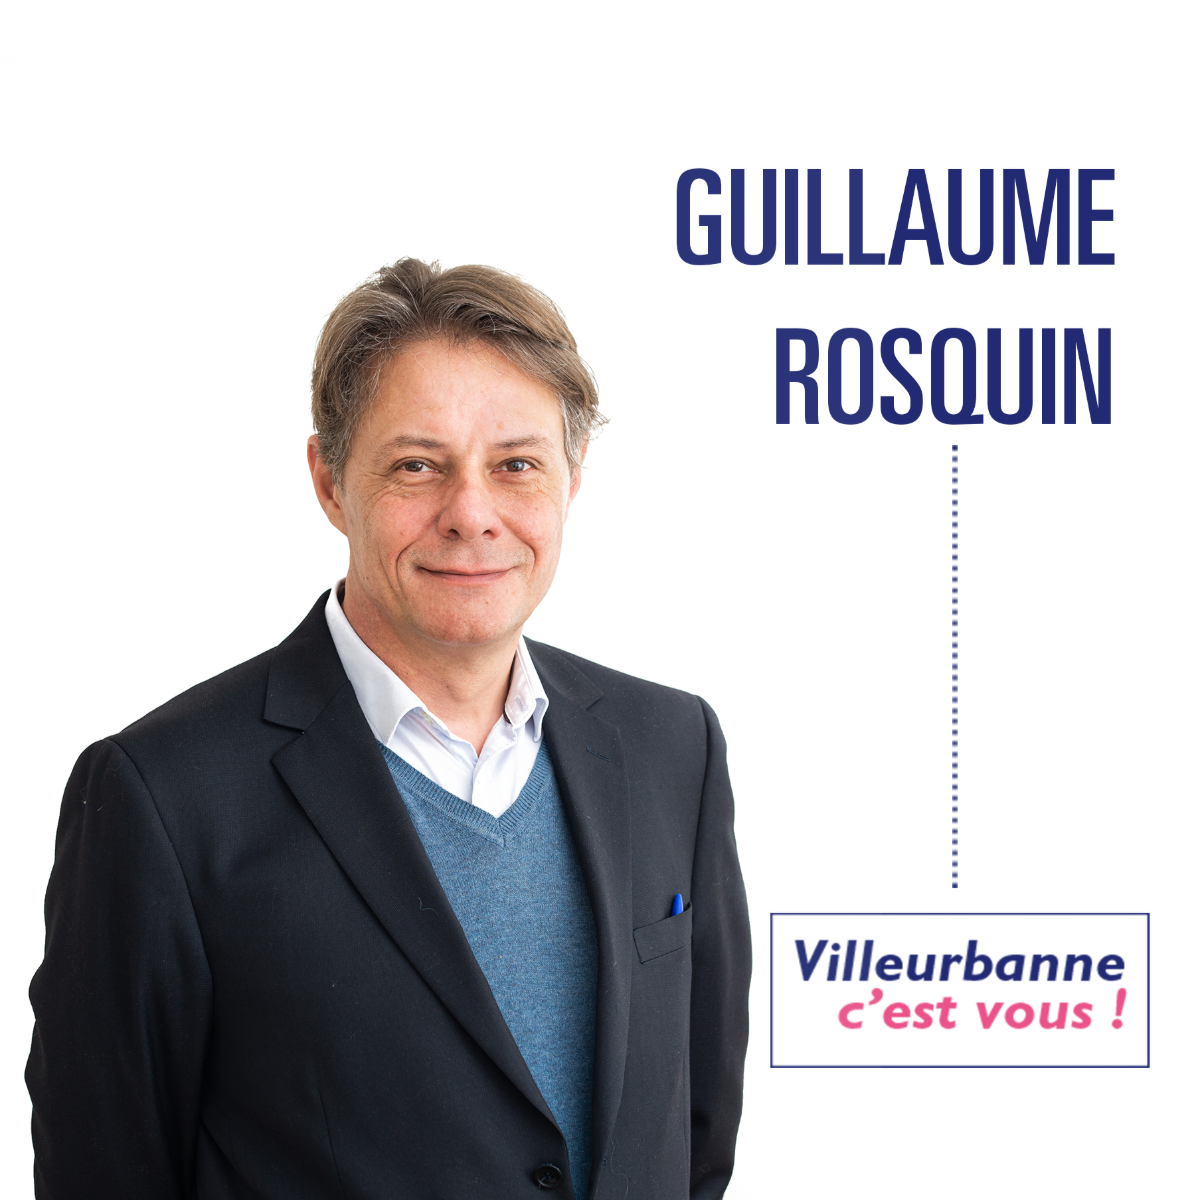 Guillaume ROSQUIN